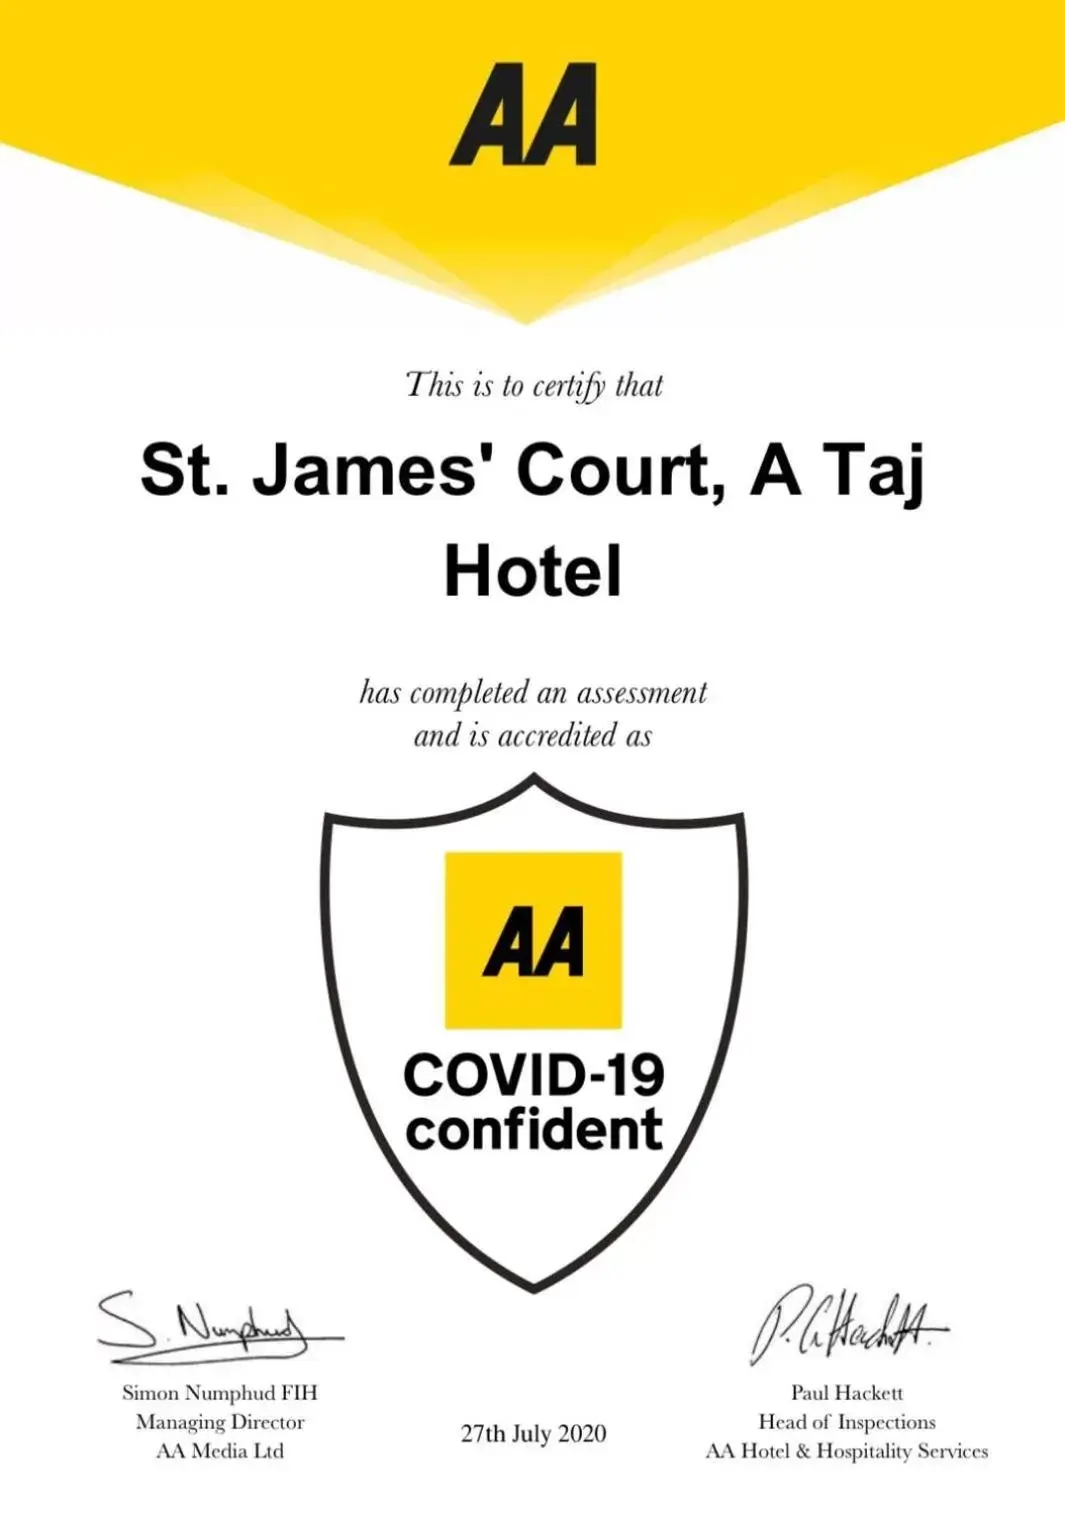 Logo/Certificate/Sign in St. James' Court, A Taj Hotel, London